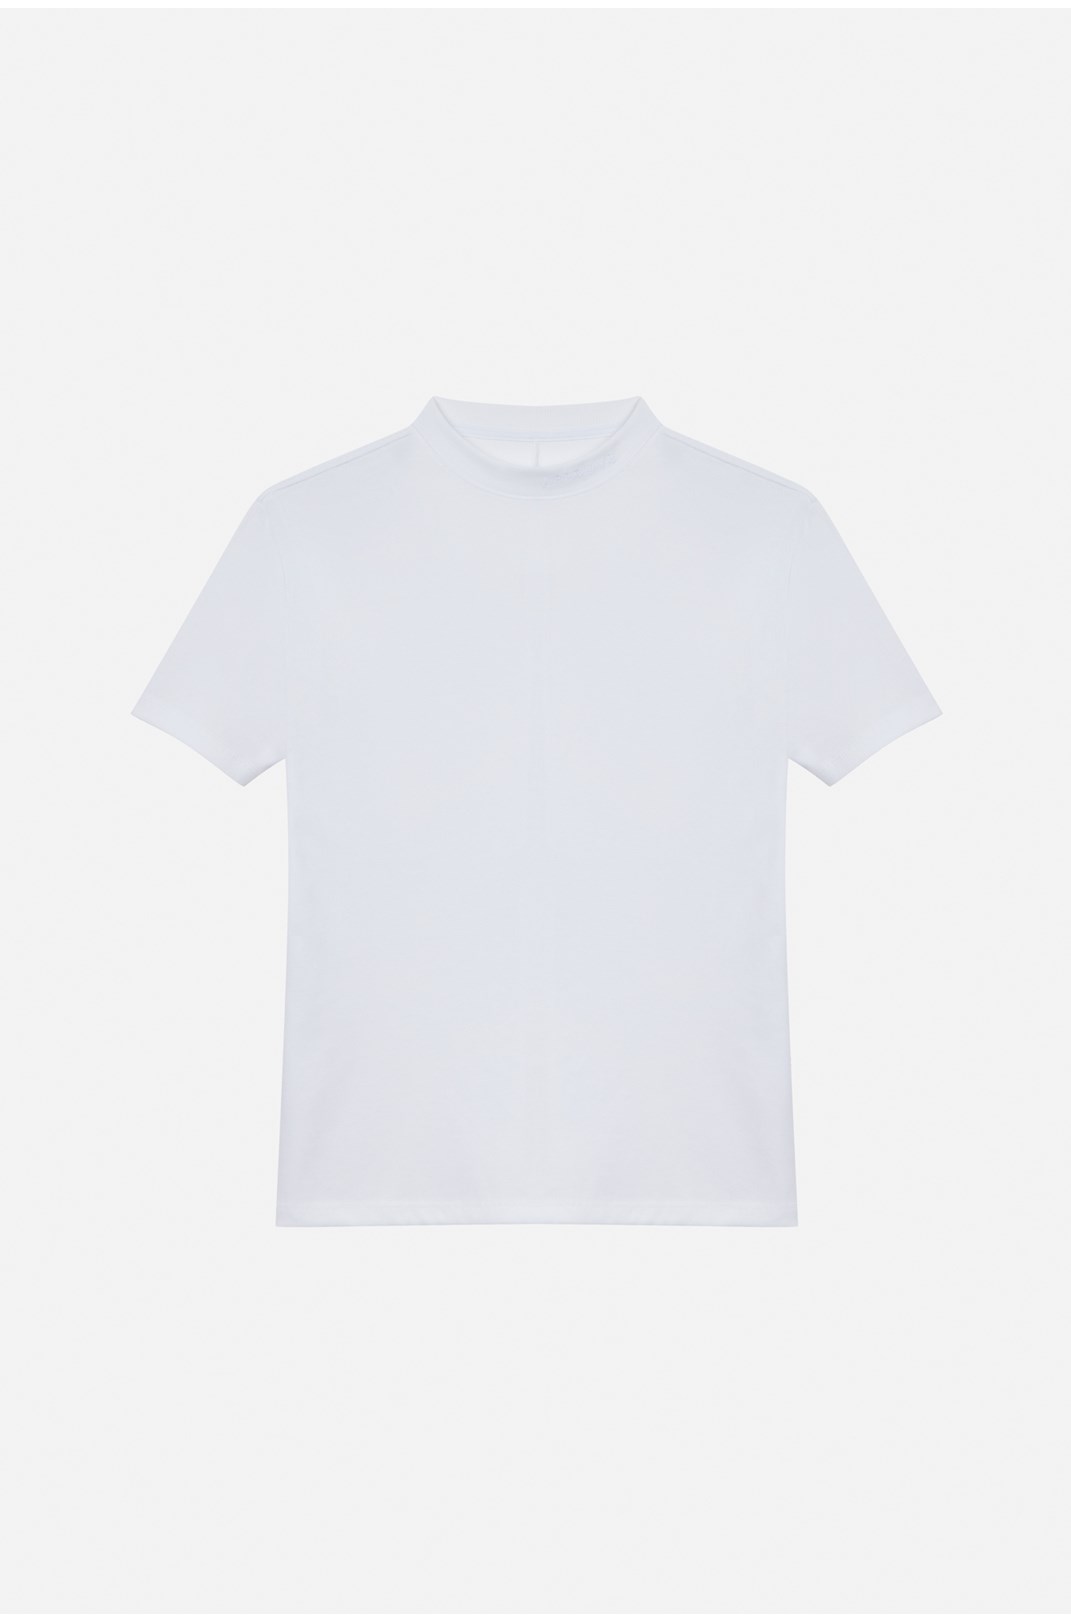 Camiseta Canelada Approve Canvas Branca